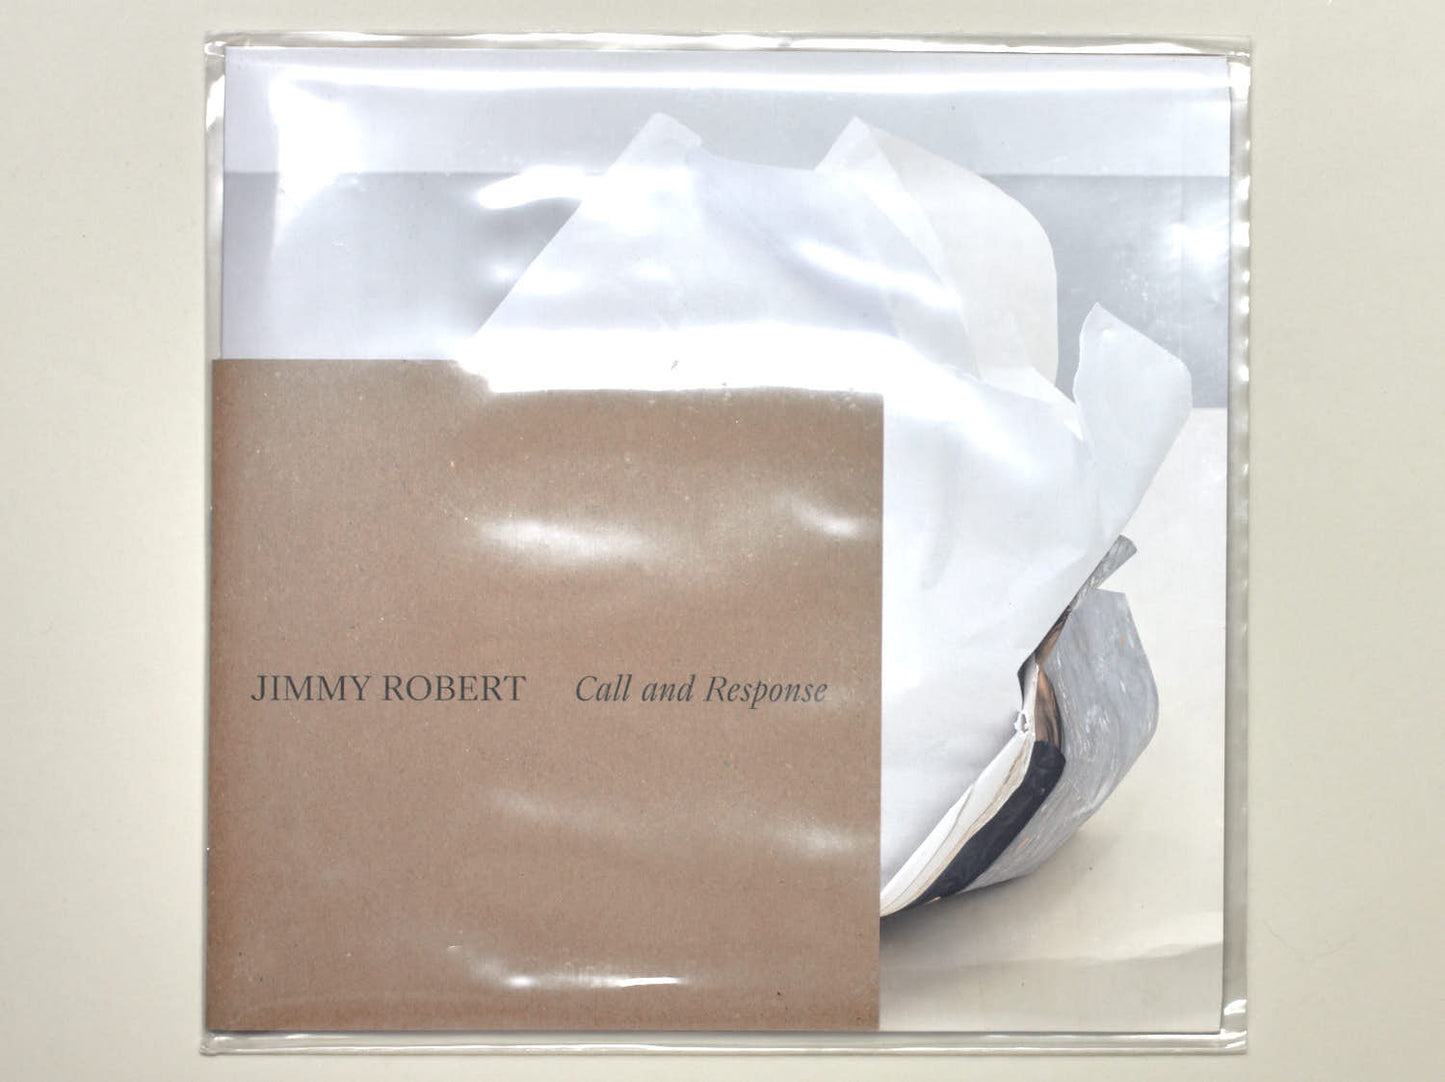 Jimmy Robert, Call and Response